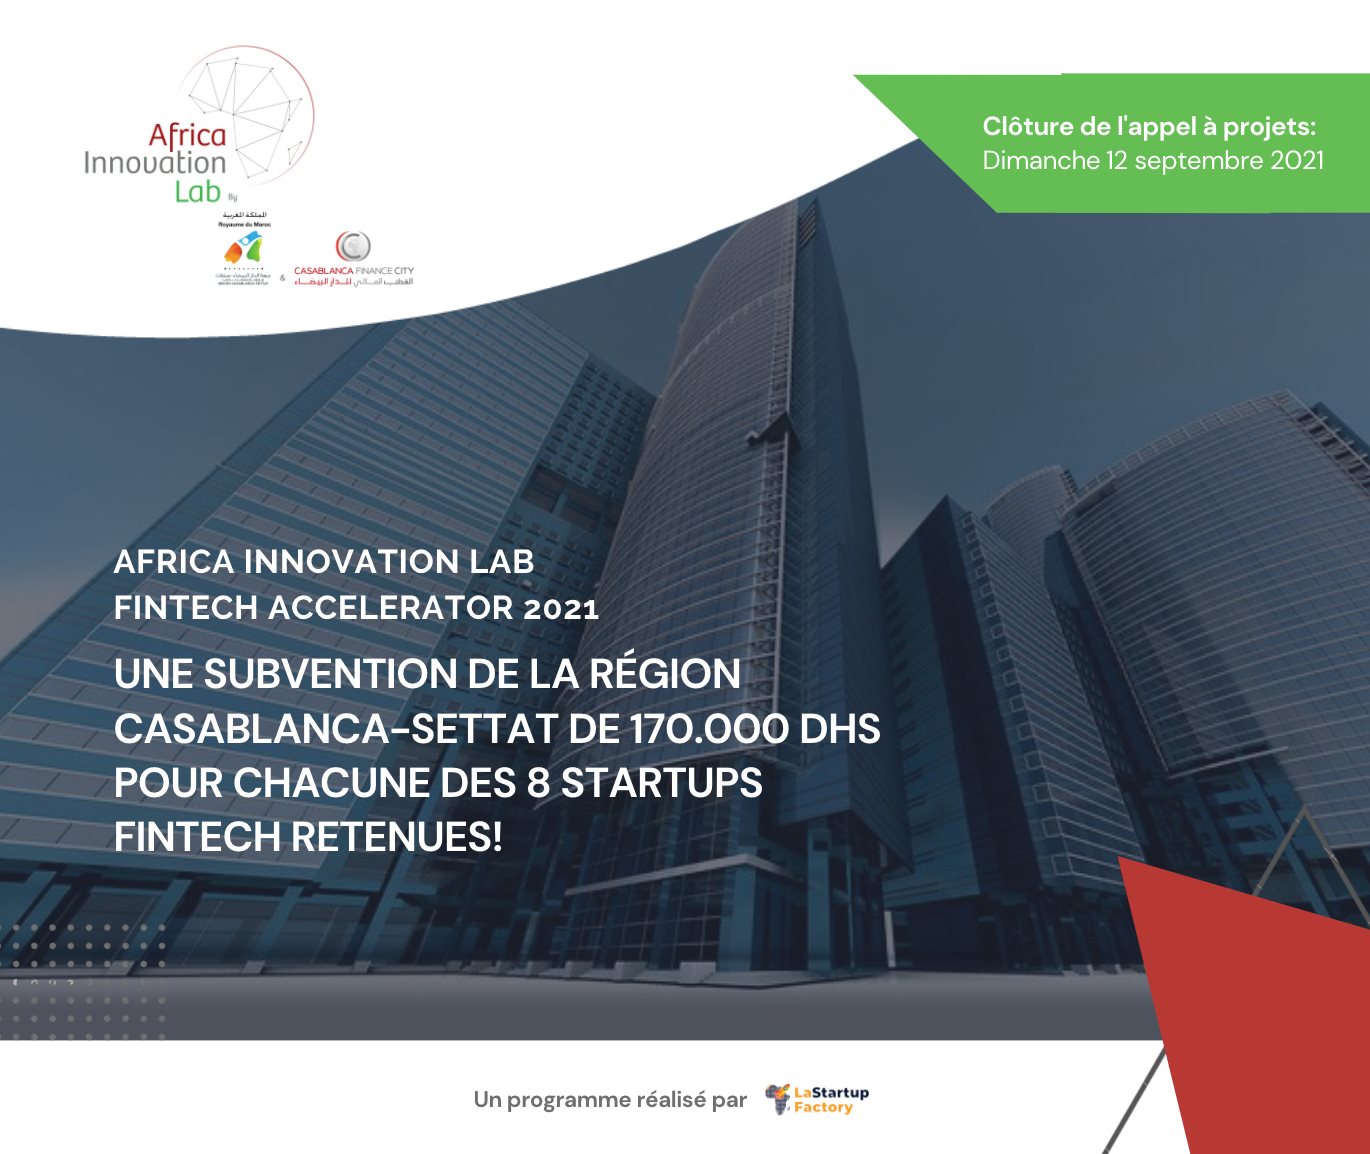 Africa Innovation Lab - FINTECH ACCELERATOR 2021